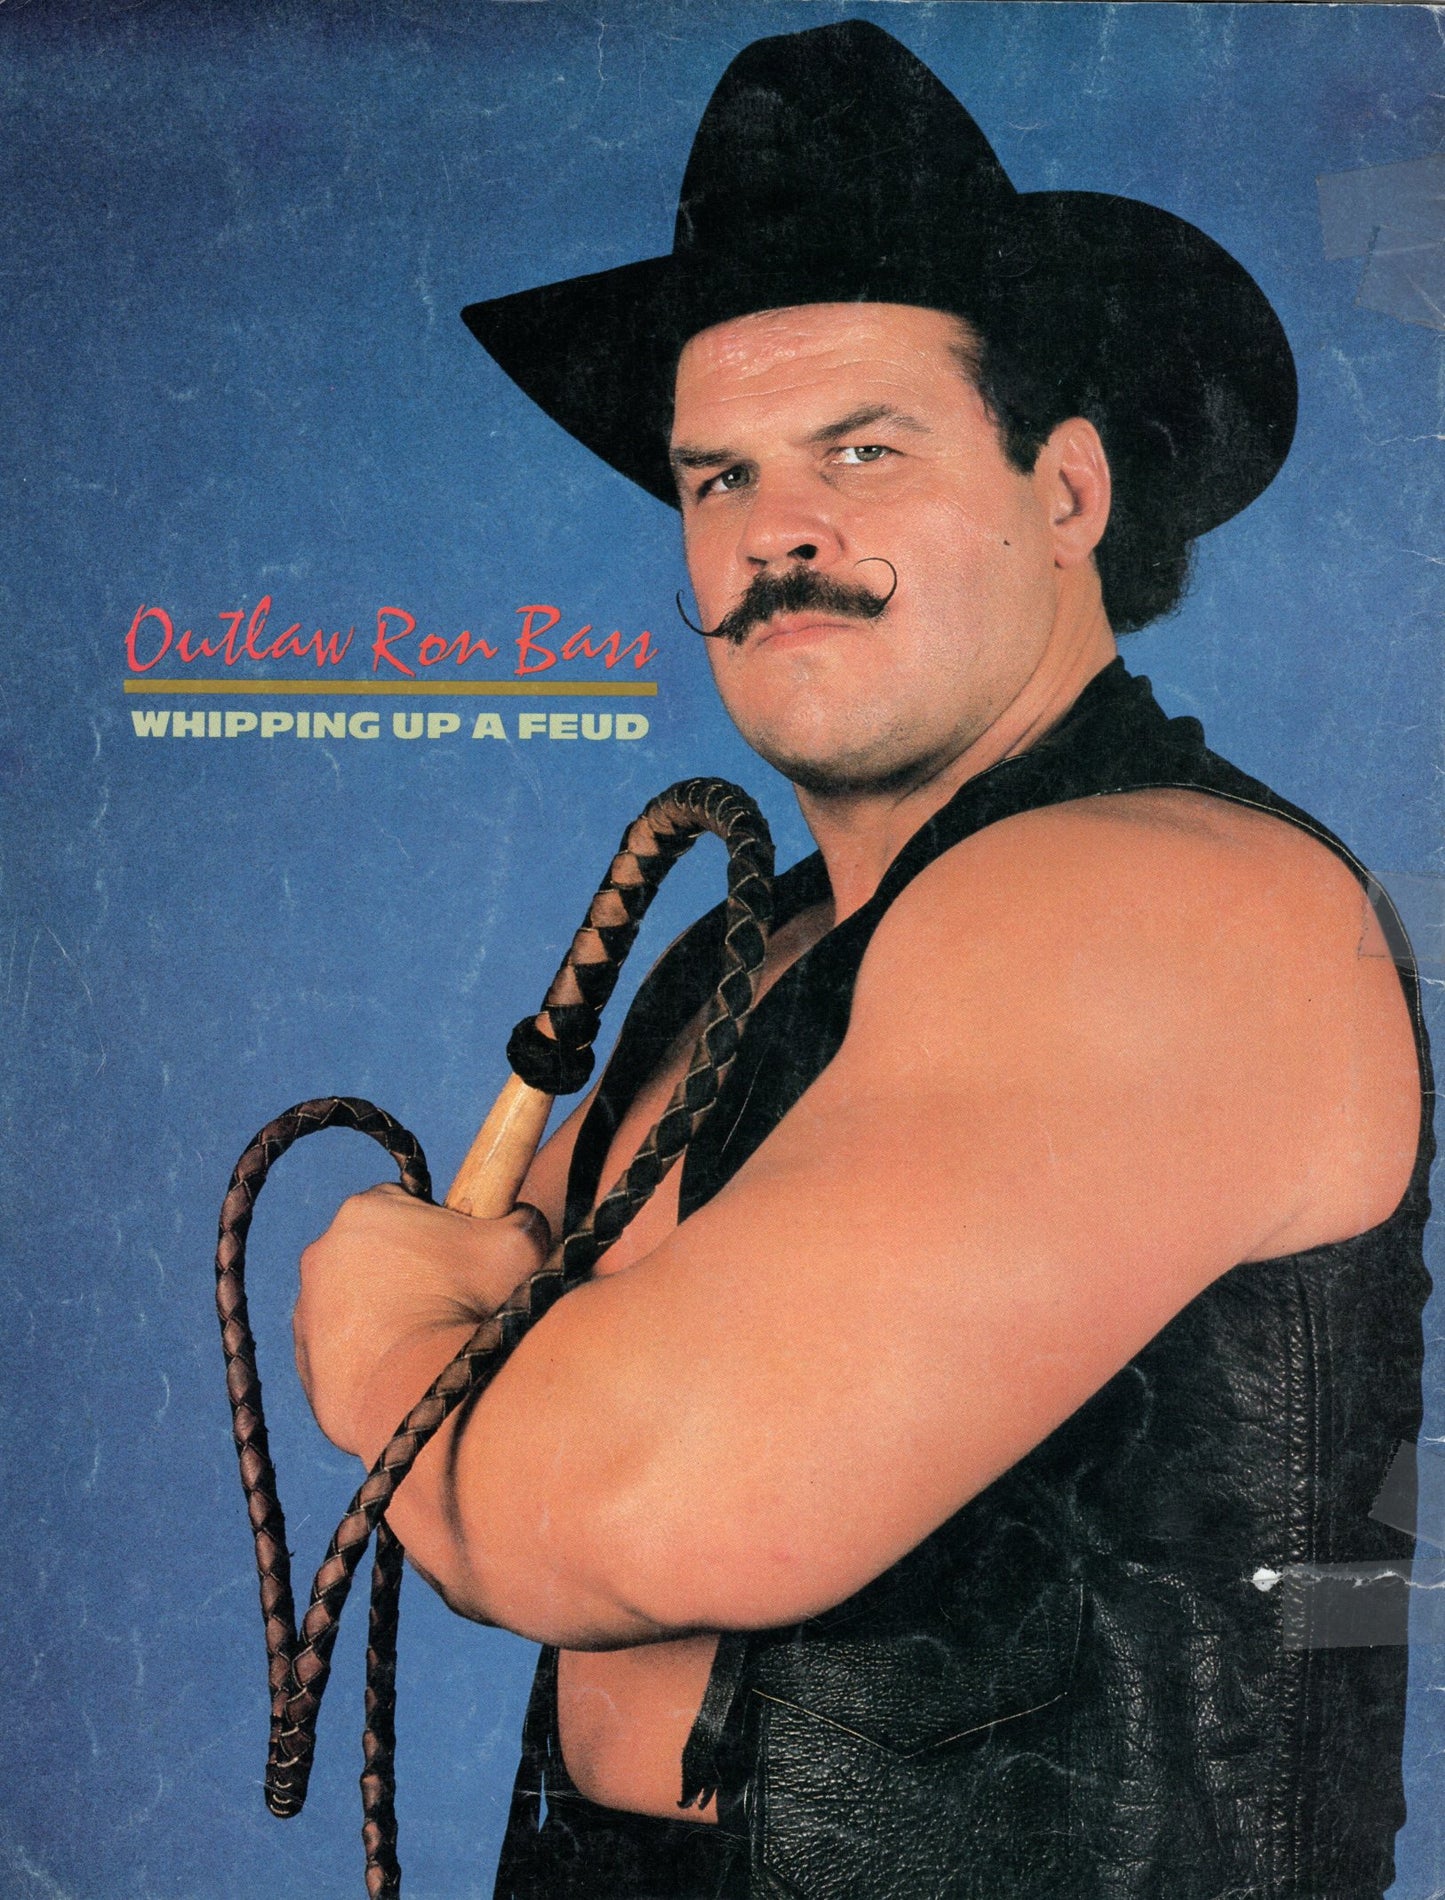 WWF World Wrestling Federation 1987 Program #150